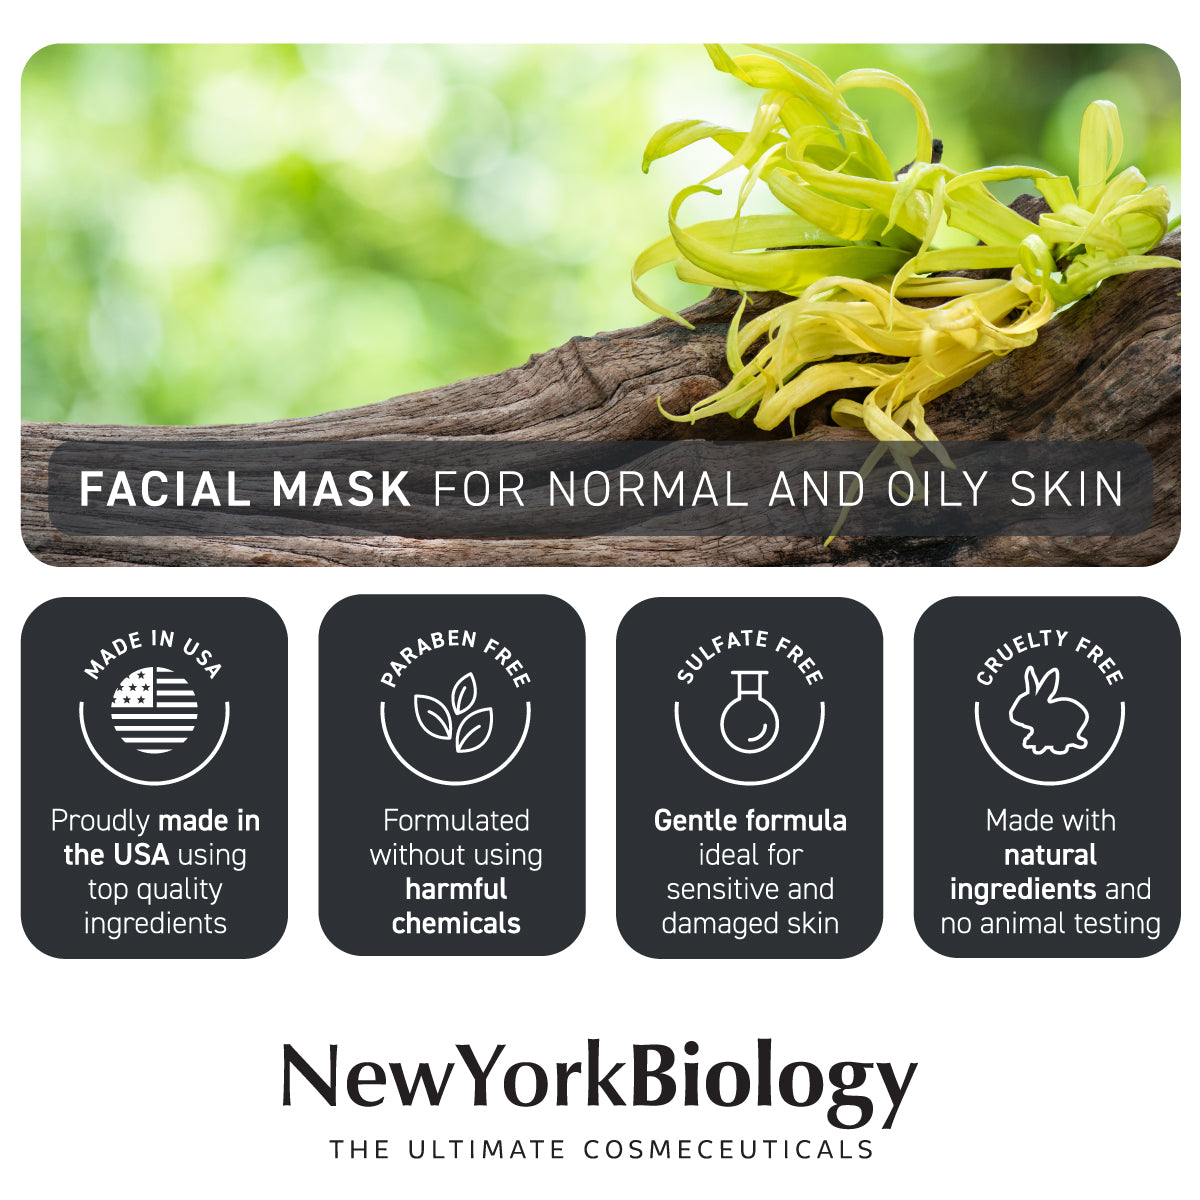 Anti Aging Facial Mask 6 oz